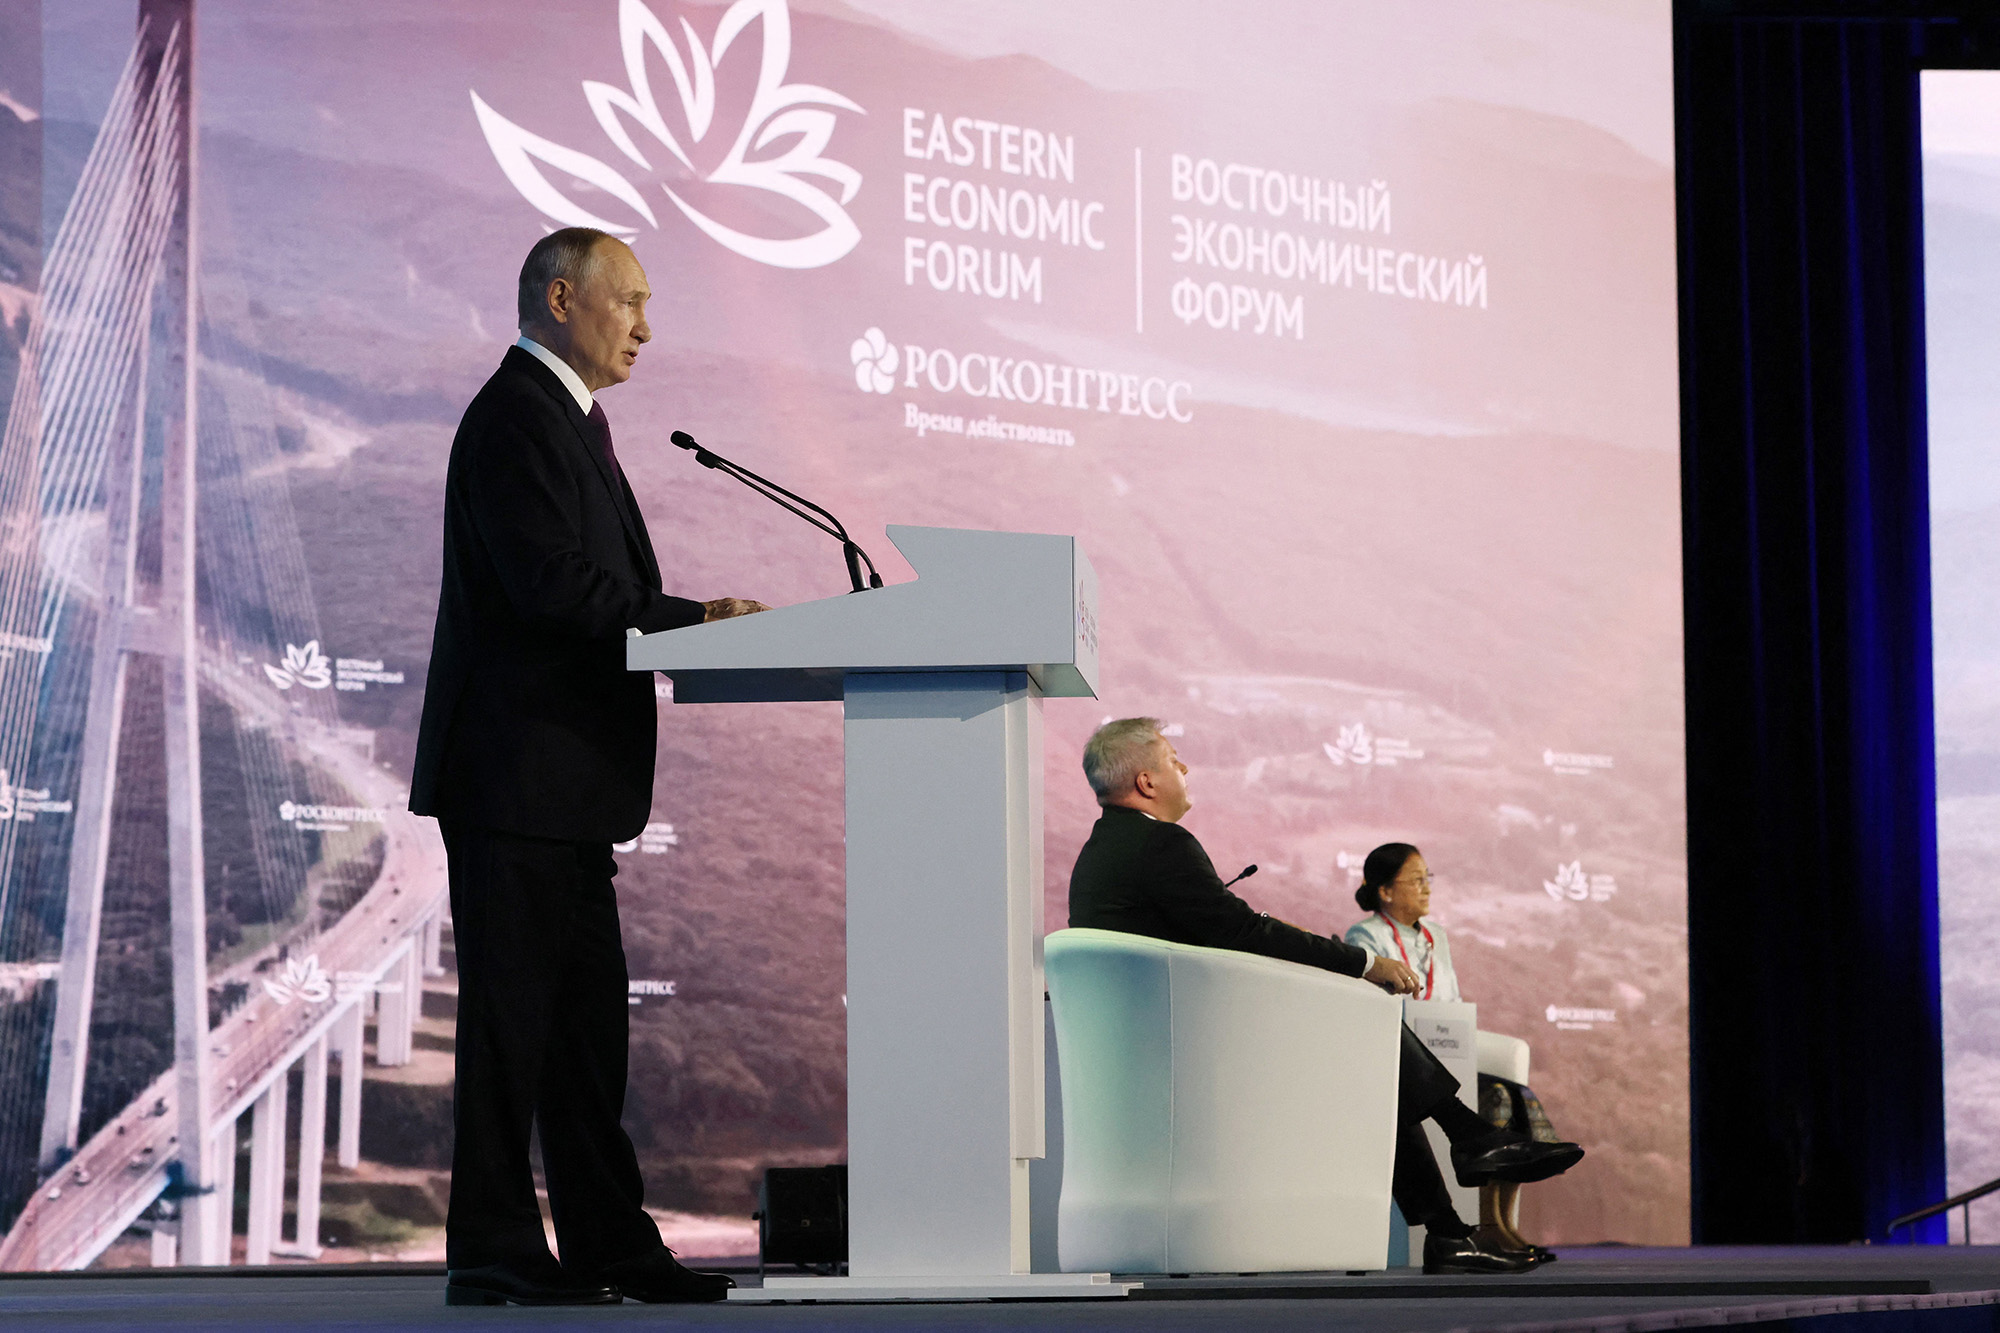 Russia's President Vladimir Putin addresses the audience during the Eastern Economic Forum in Vladivostok, Russia, on September 12.